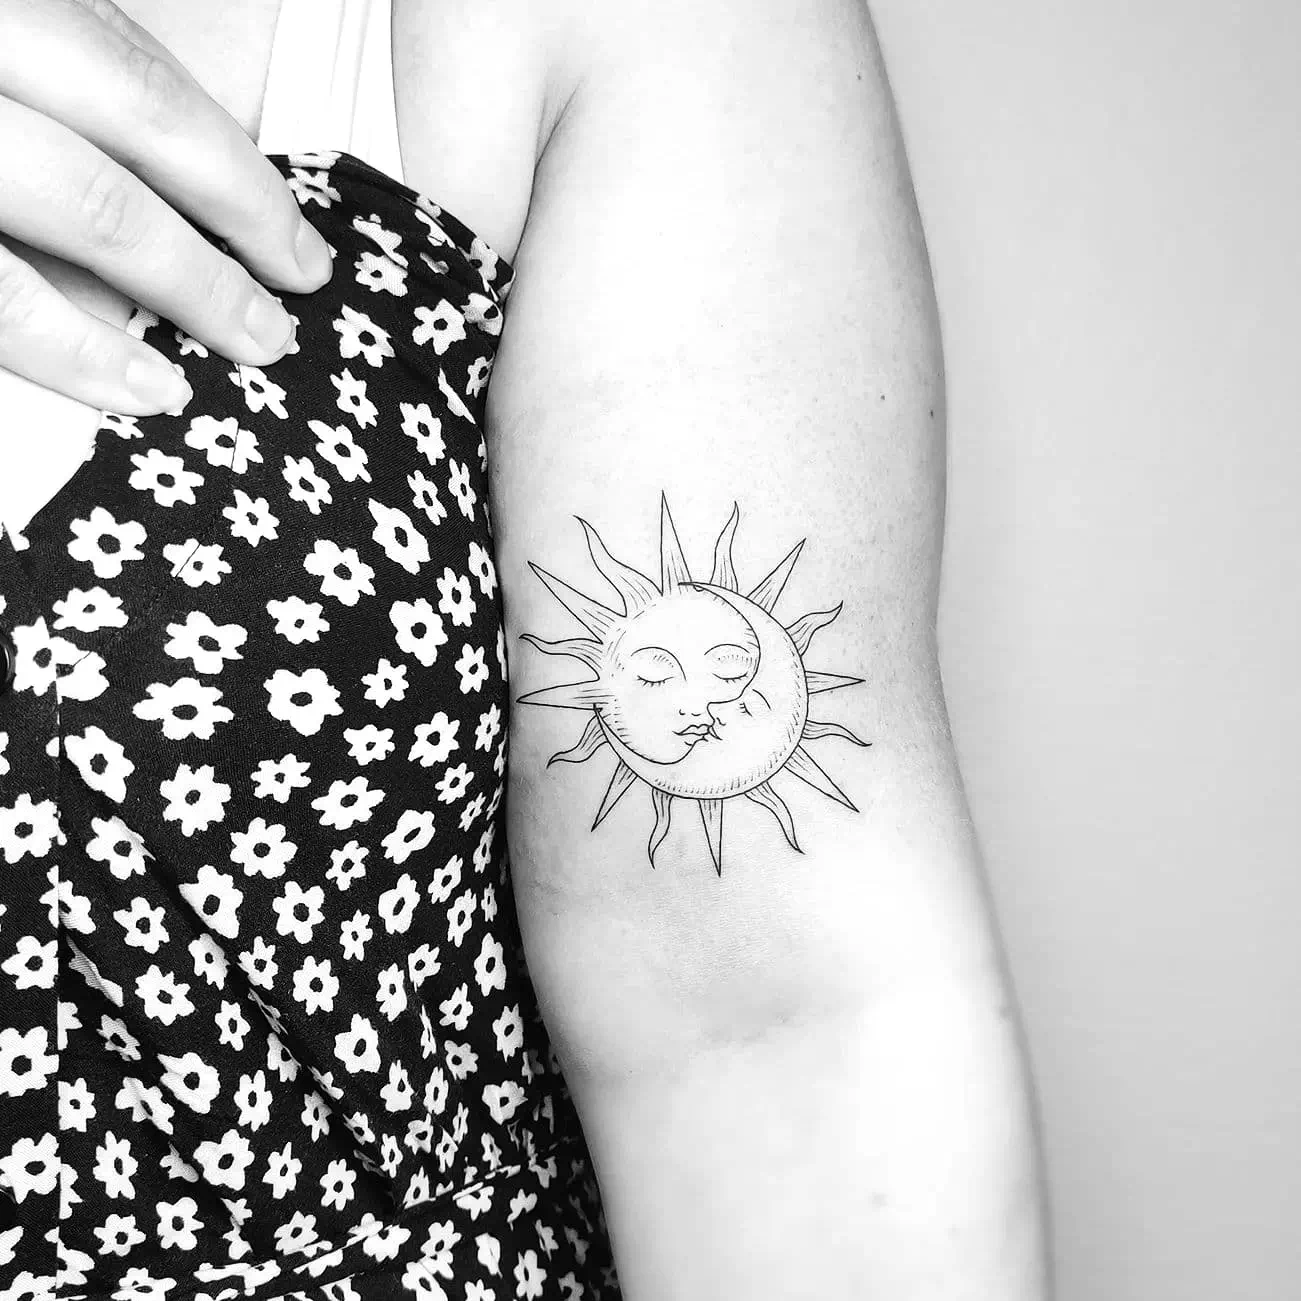 Tatuaje Sol y Luna 5